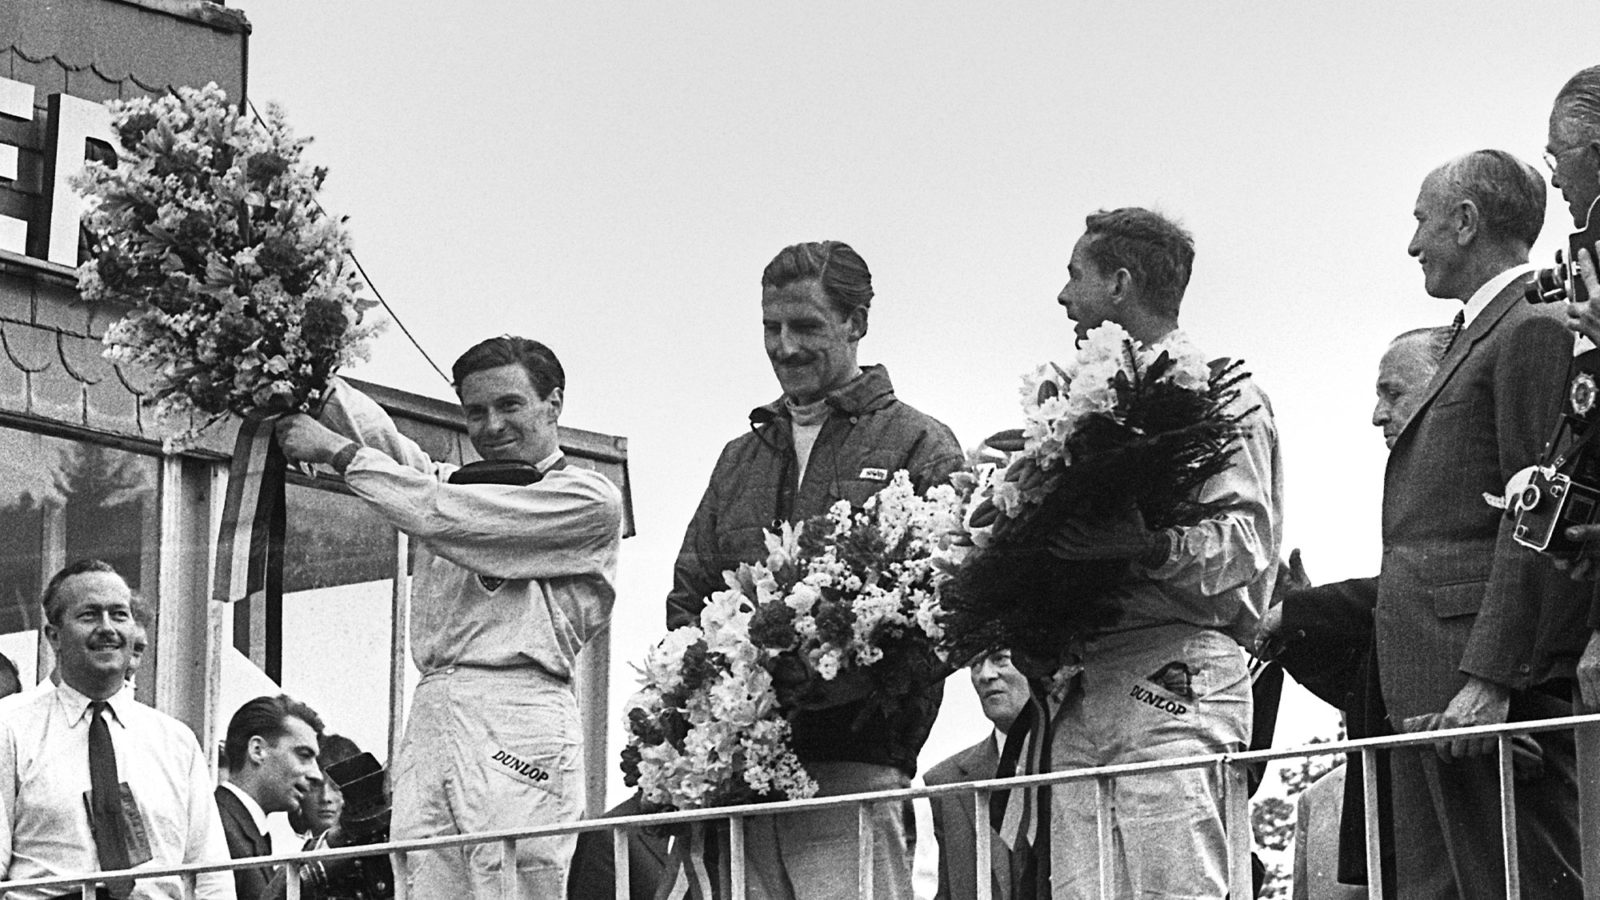 Jim Clark celebrates his maiden world championship win at the 1962 Belgian Grand Prix